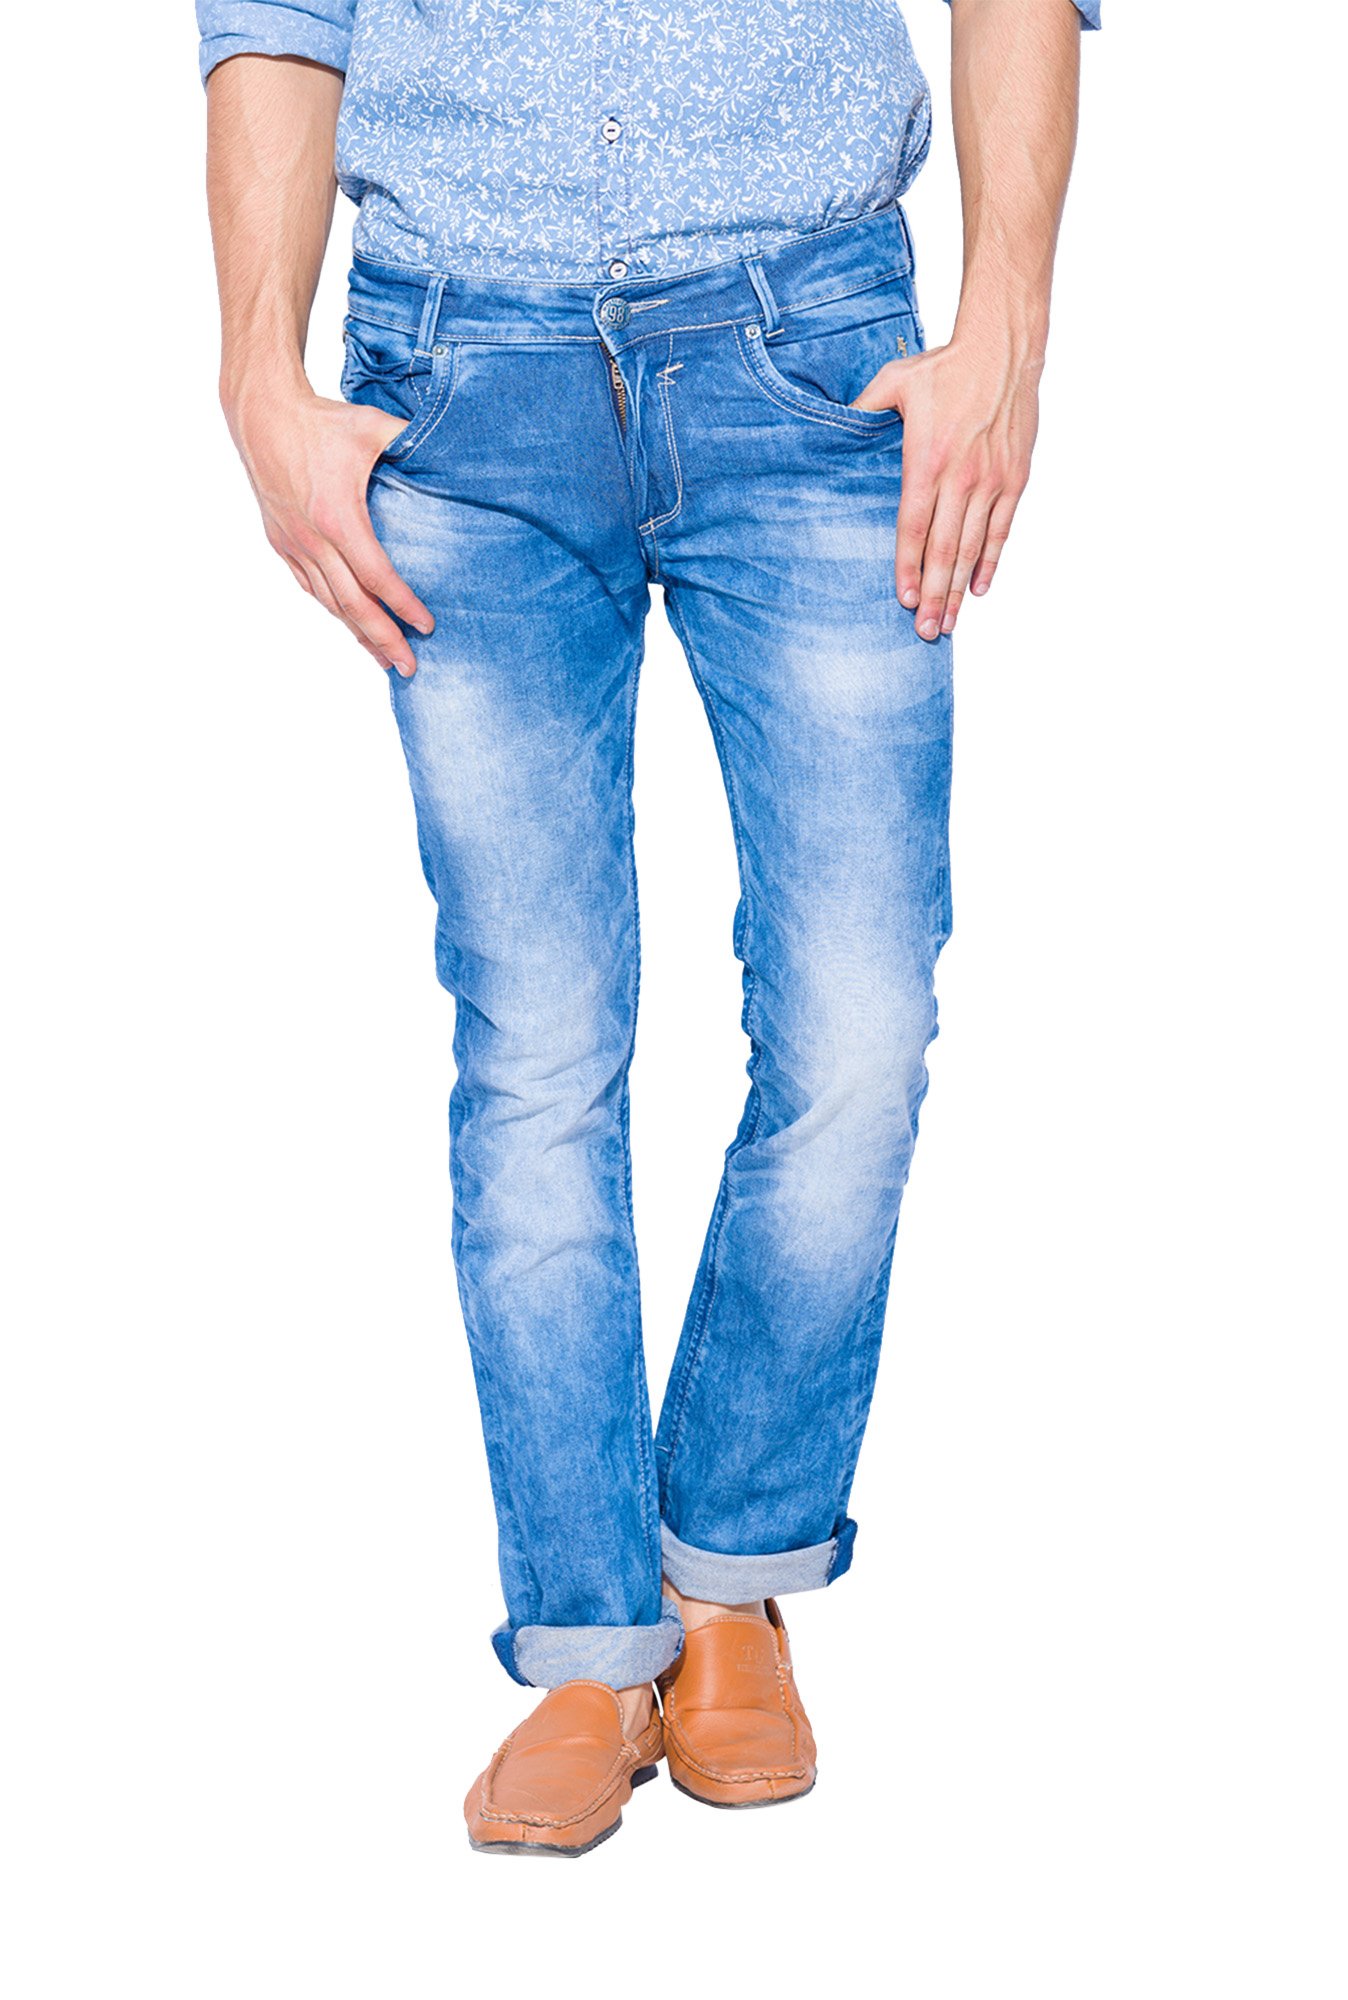 j brand high rise skinny jeans